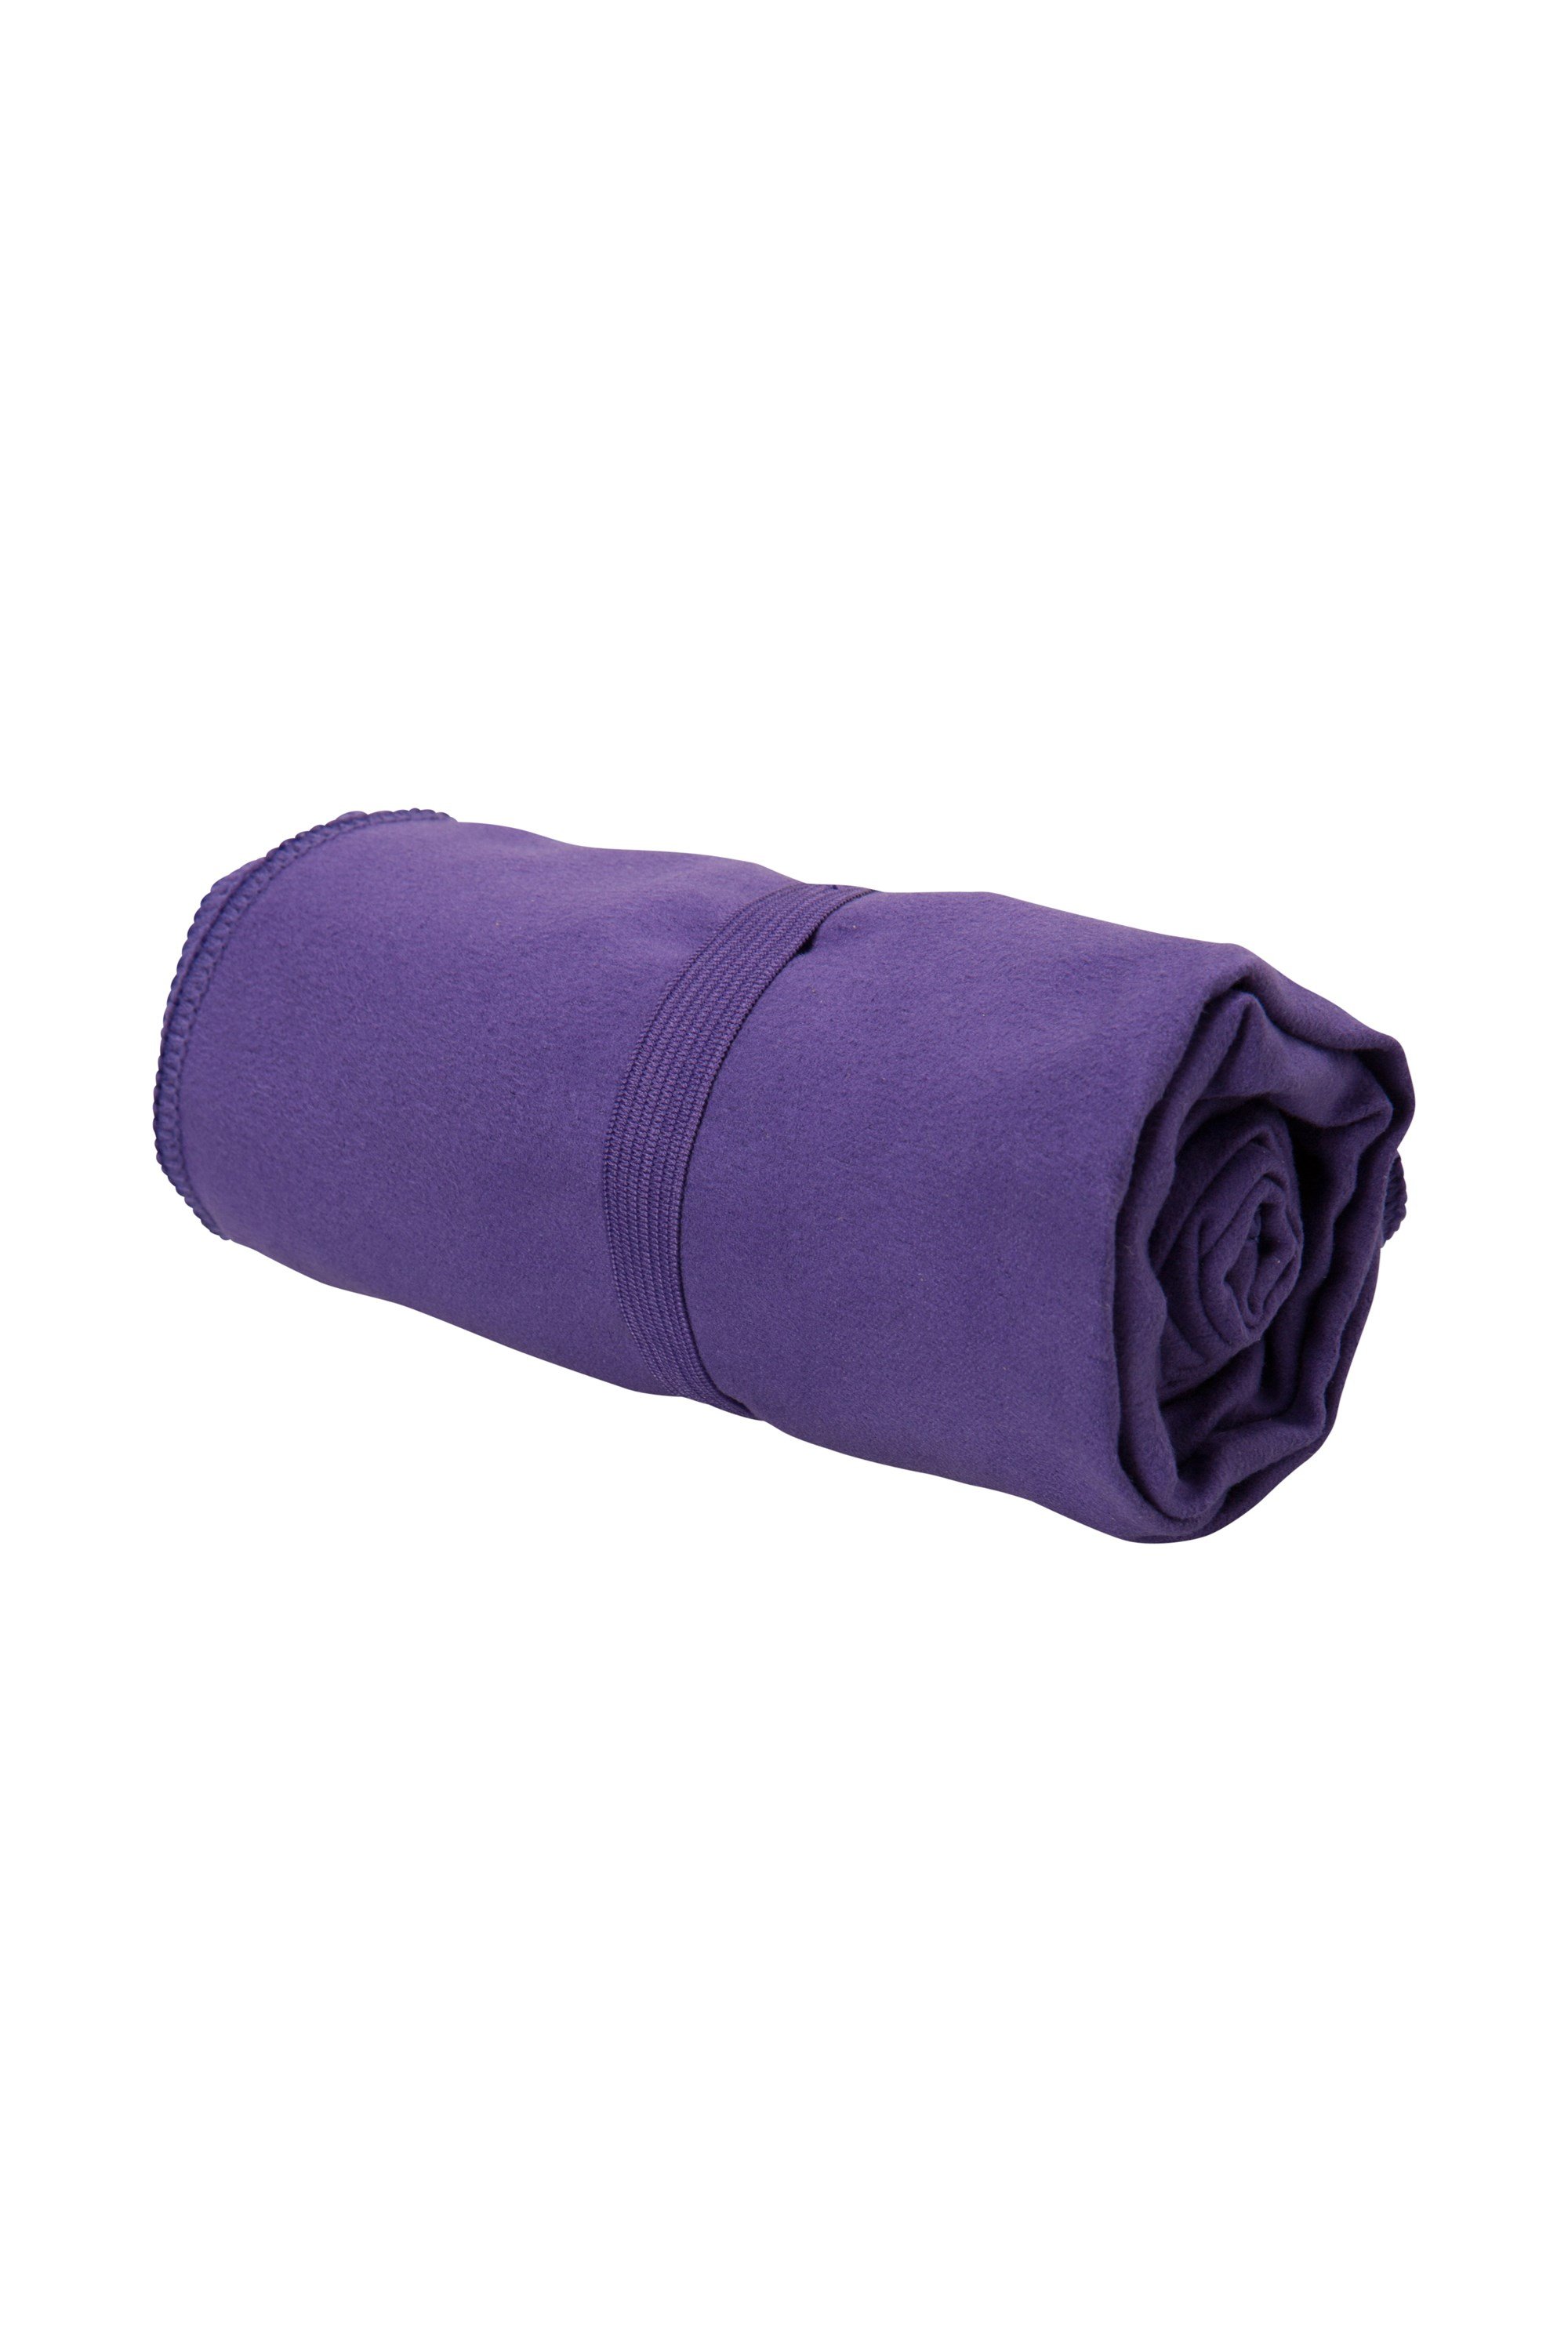 Compact Travel Towel - 120 x 58cm - Purple